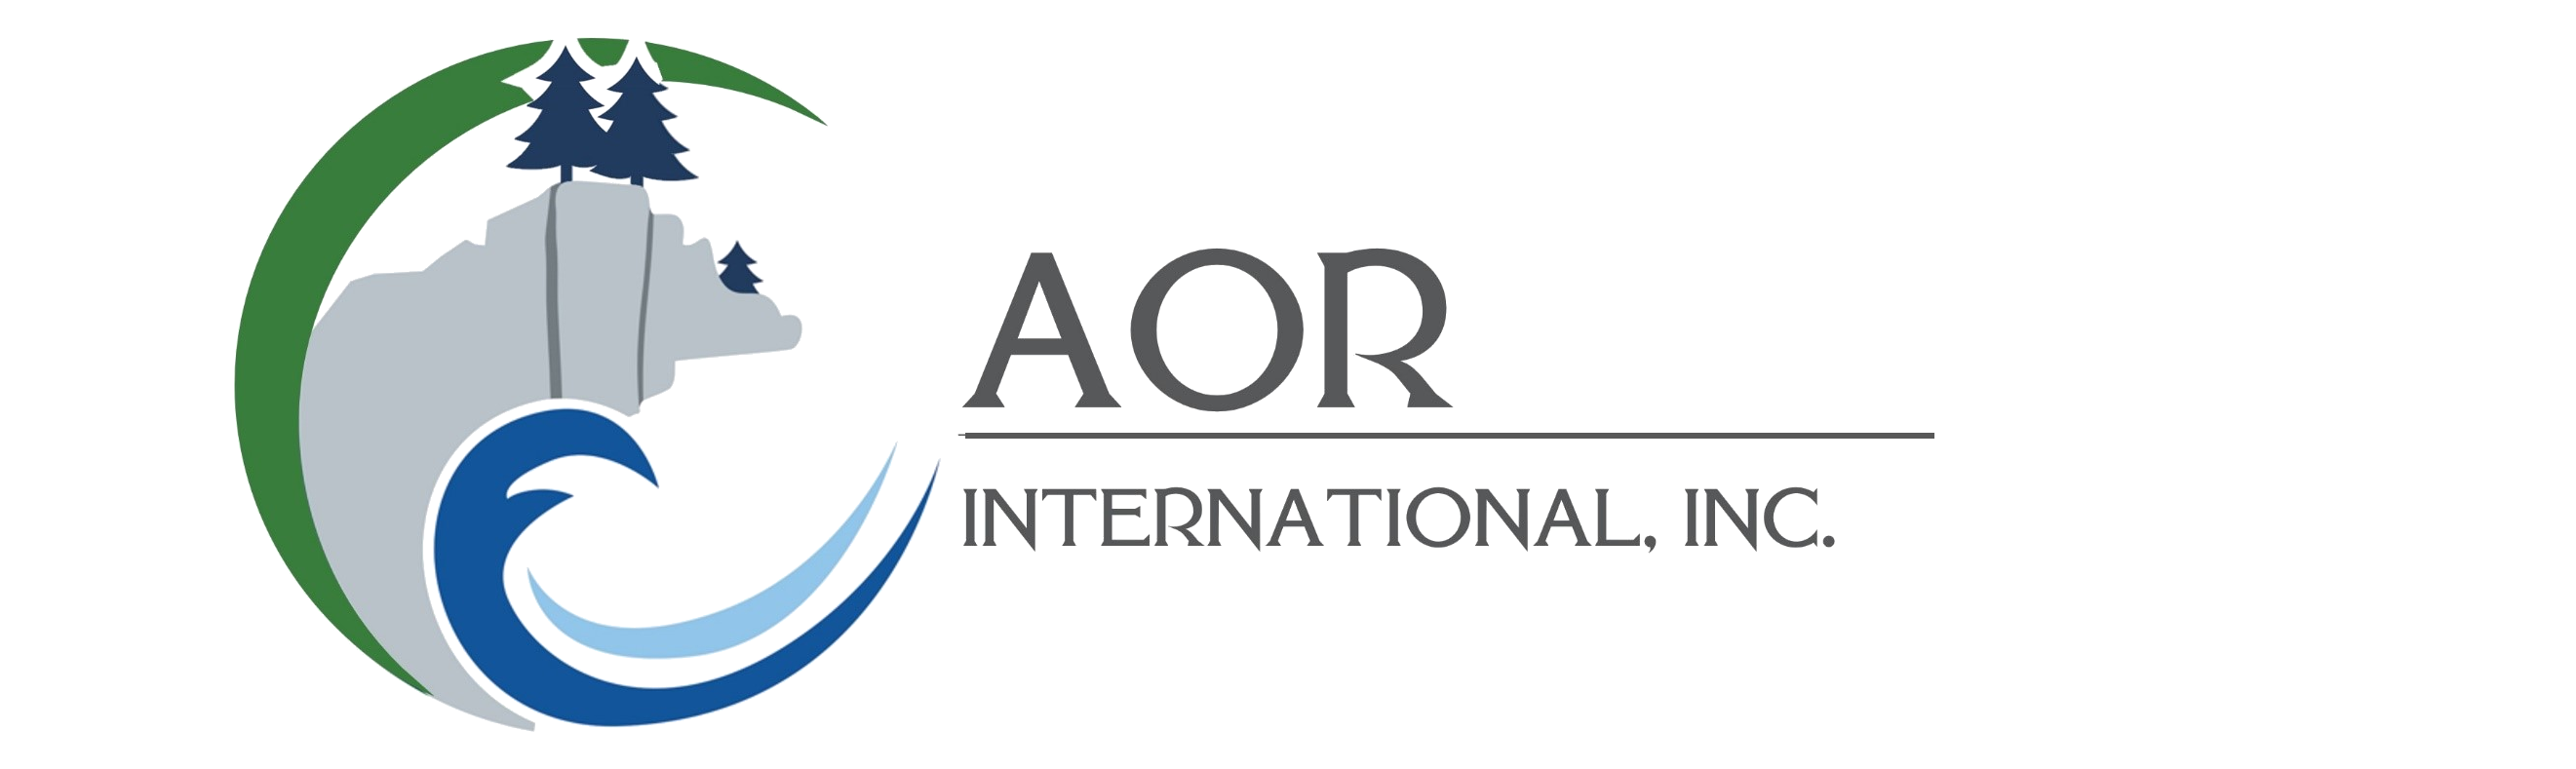 AOR International